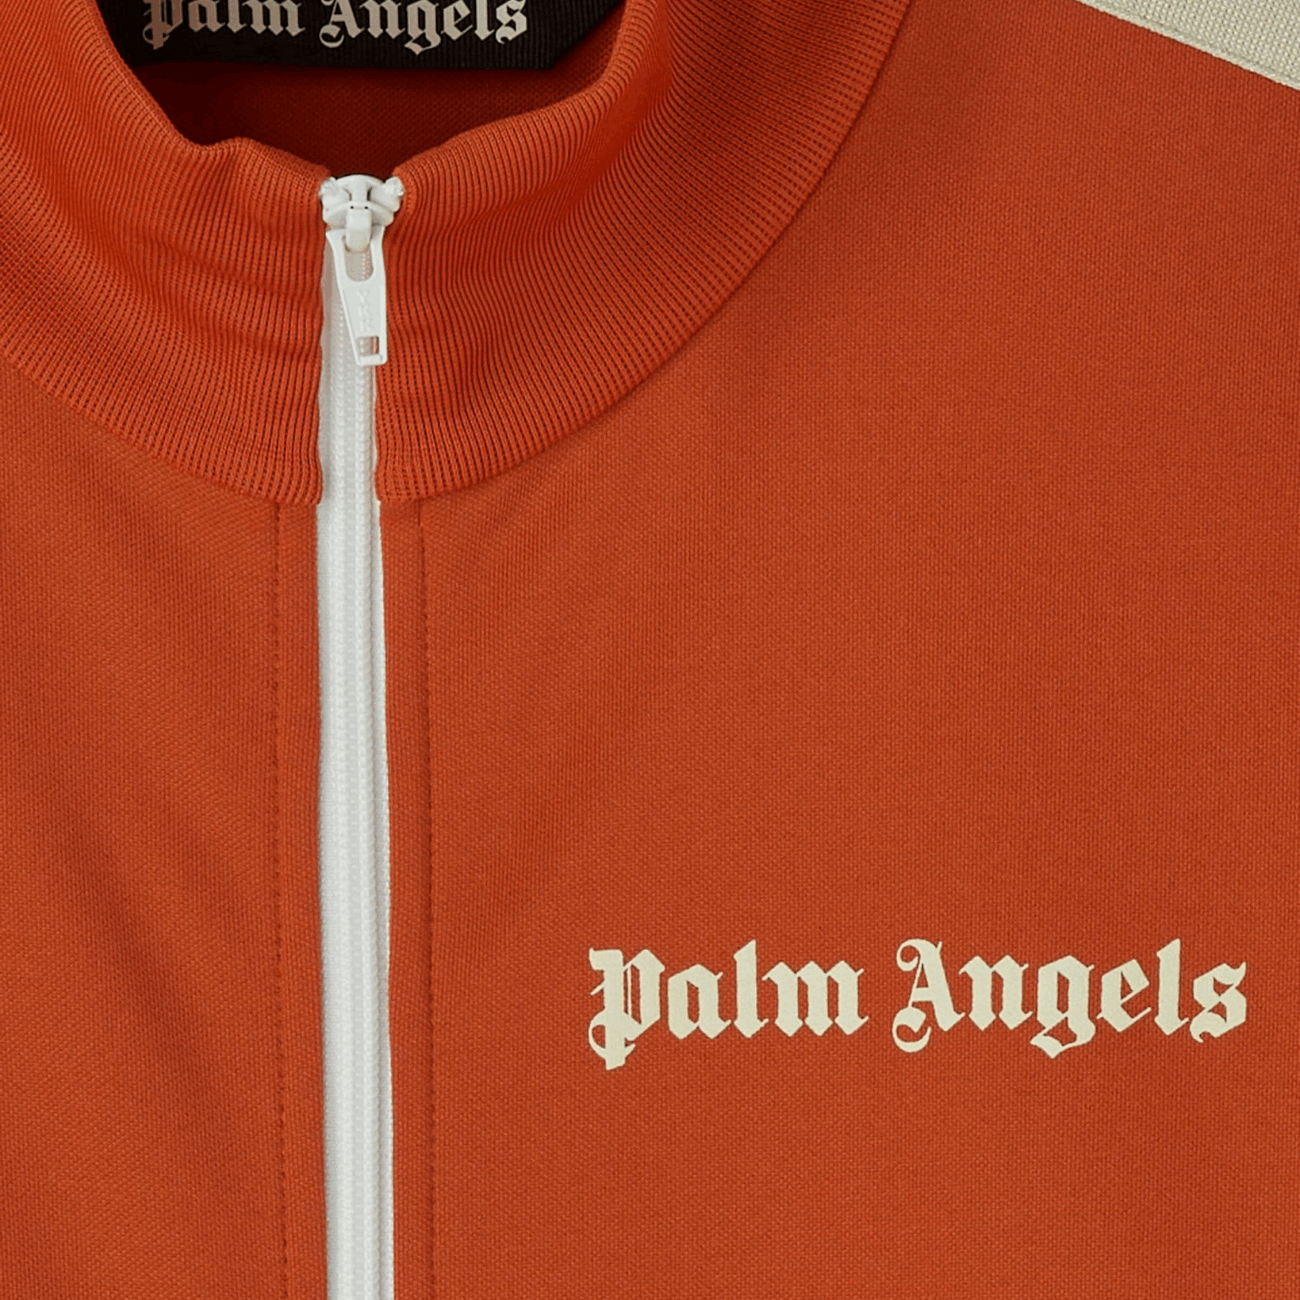 Palm Angels PMBD001F22FAB0022703 Classic Men's Track Jacket, Brick Red